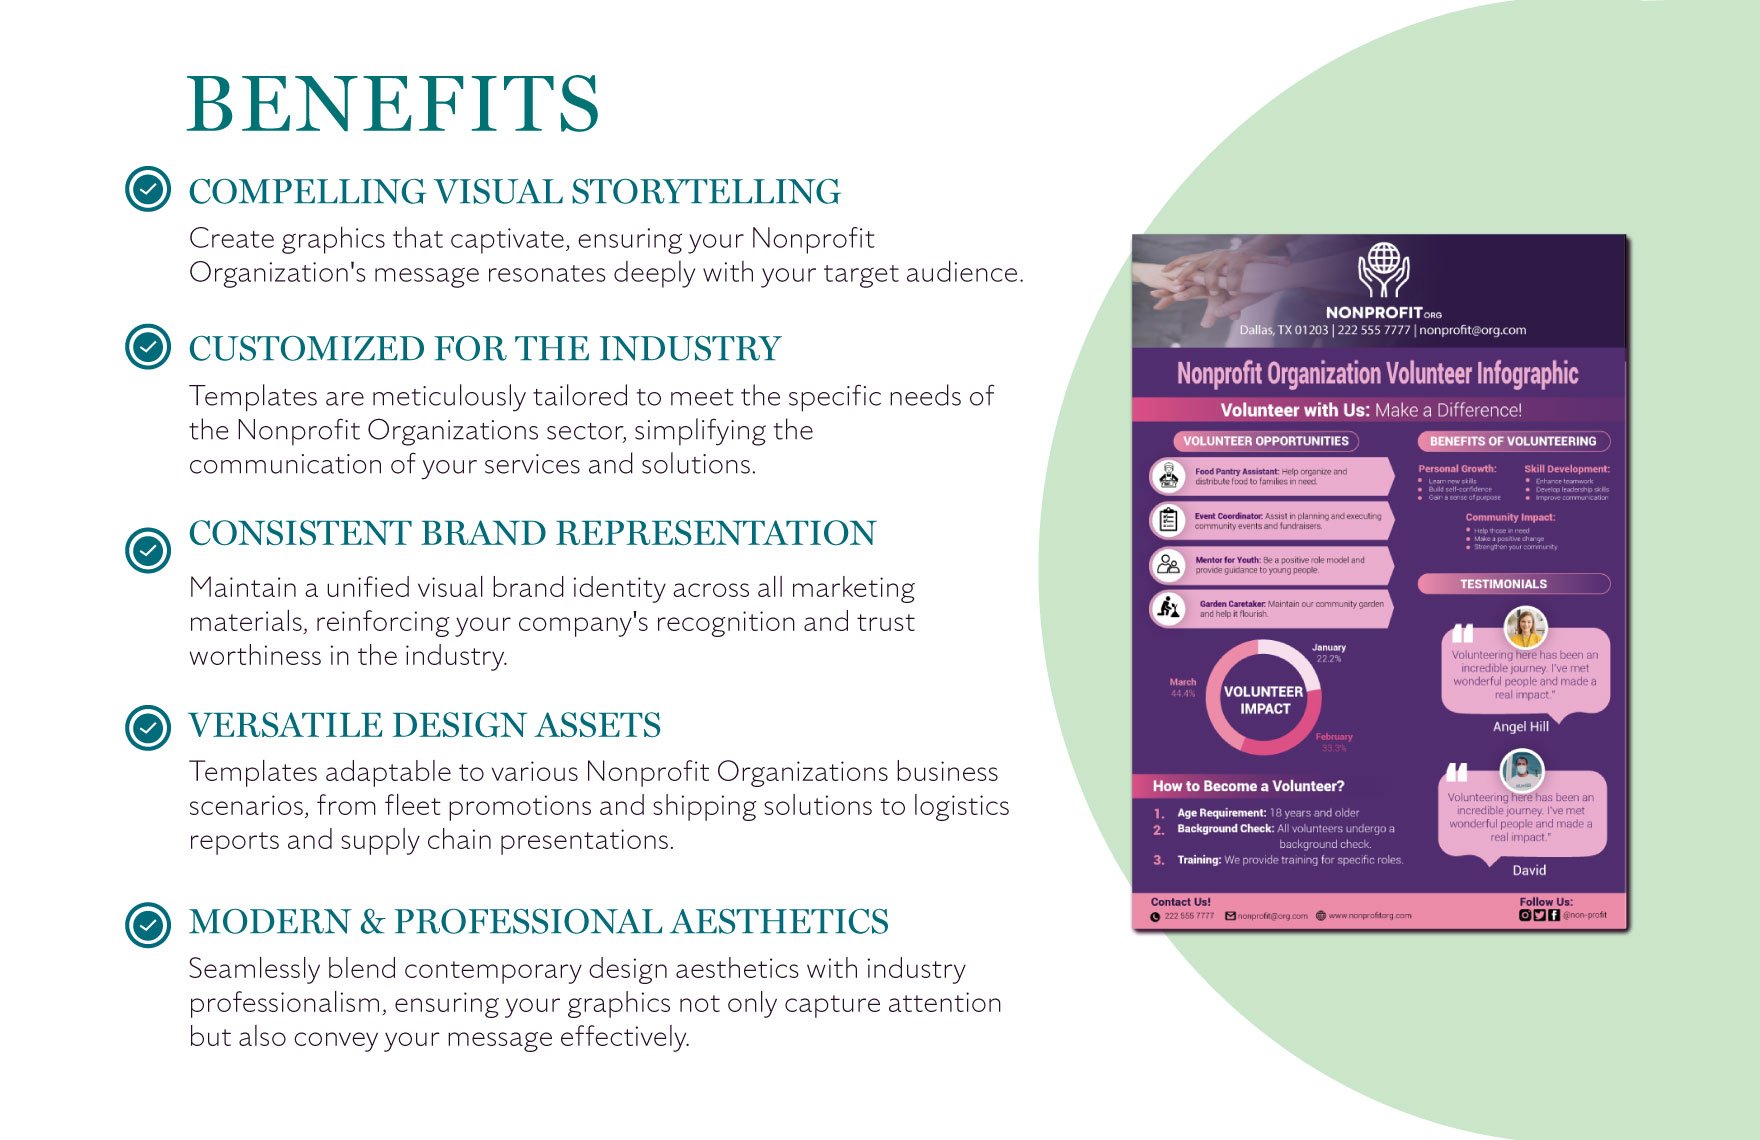 Nonprofit Organization Volunteer Infographic Template